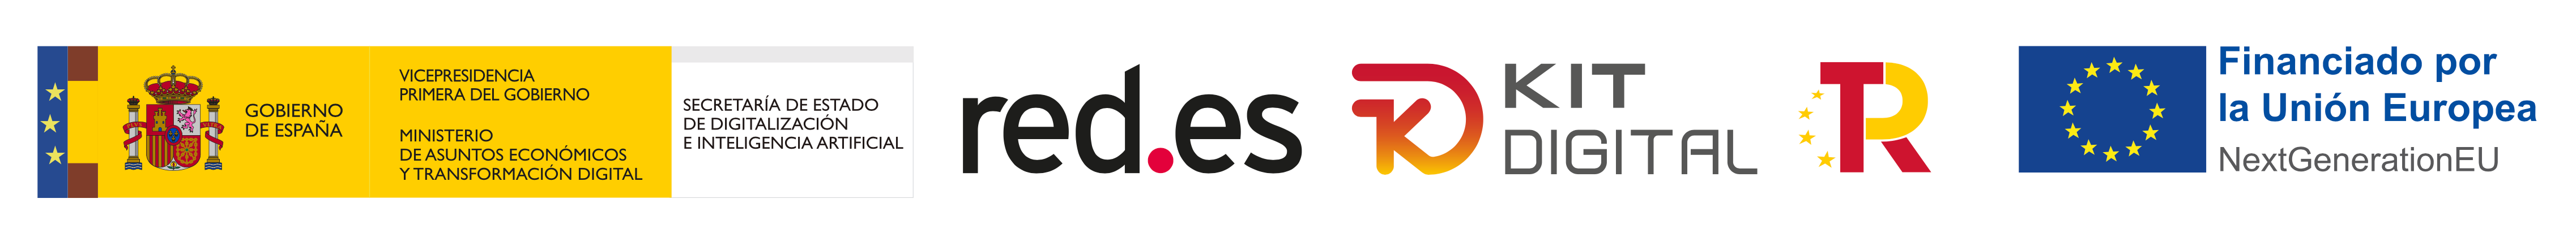 Kit Digital Logos Oficiales